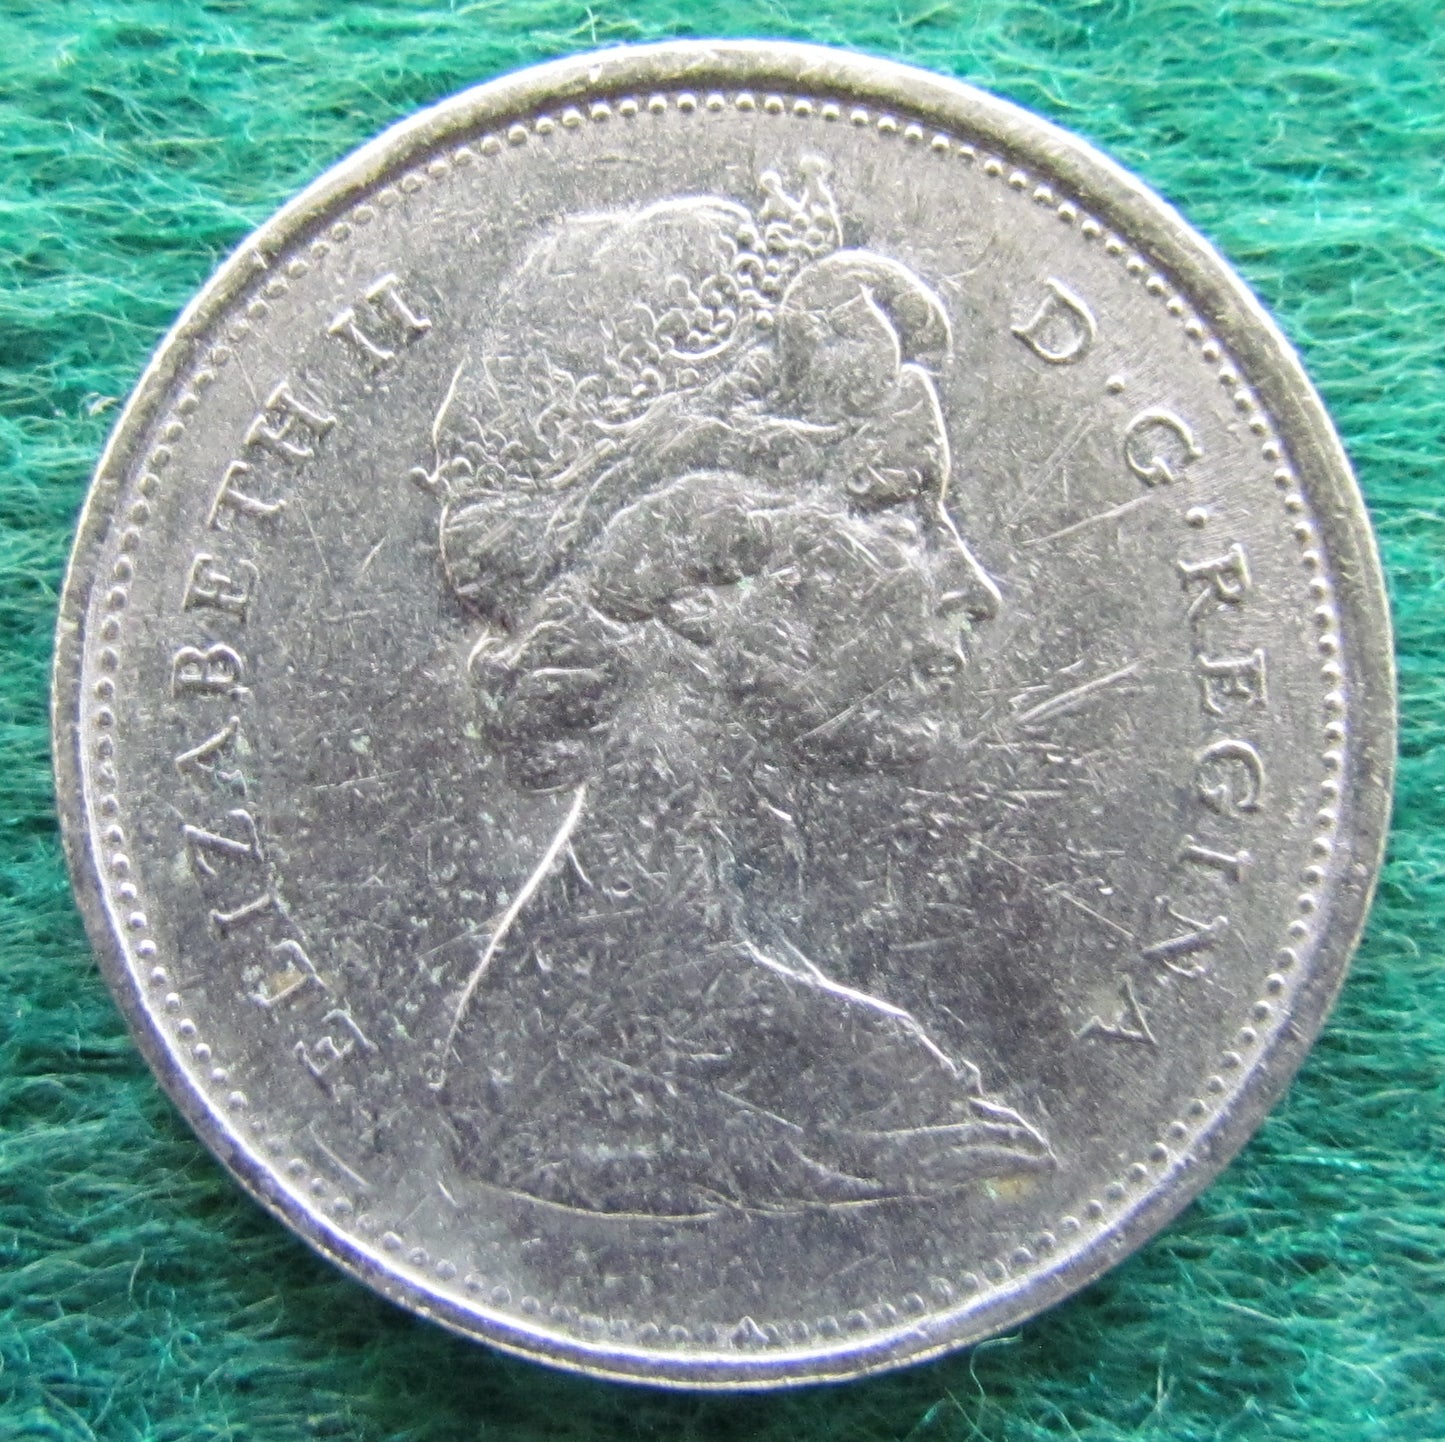 Canada 1969 25 Cent Queen Elizabeth II Coin - Circulated